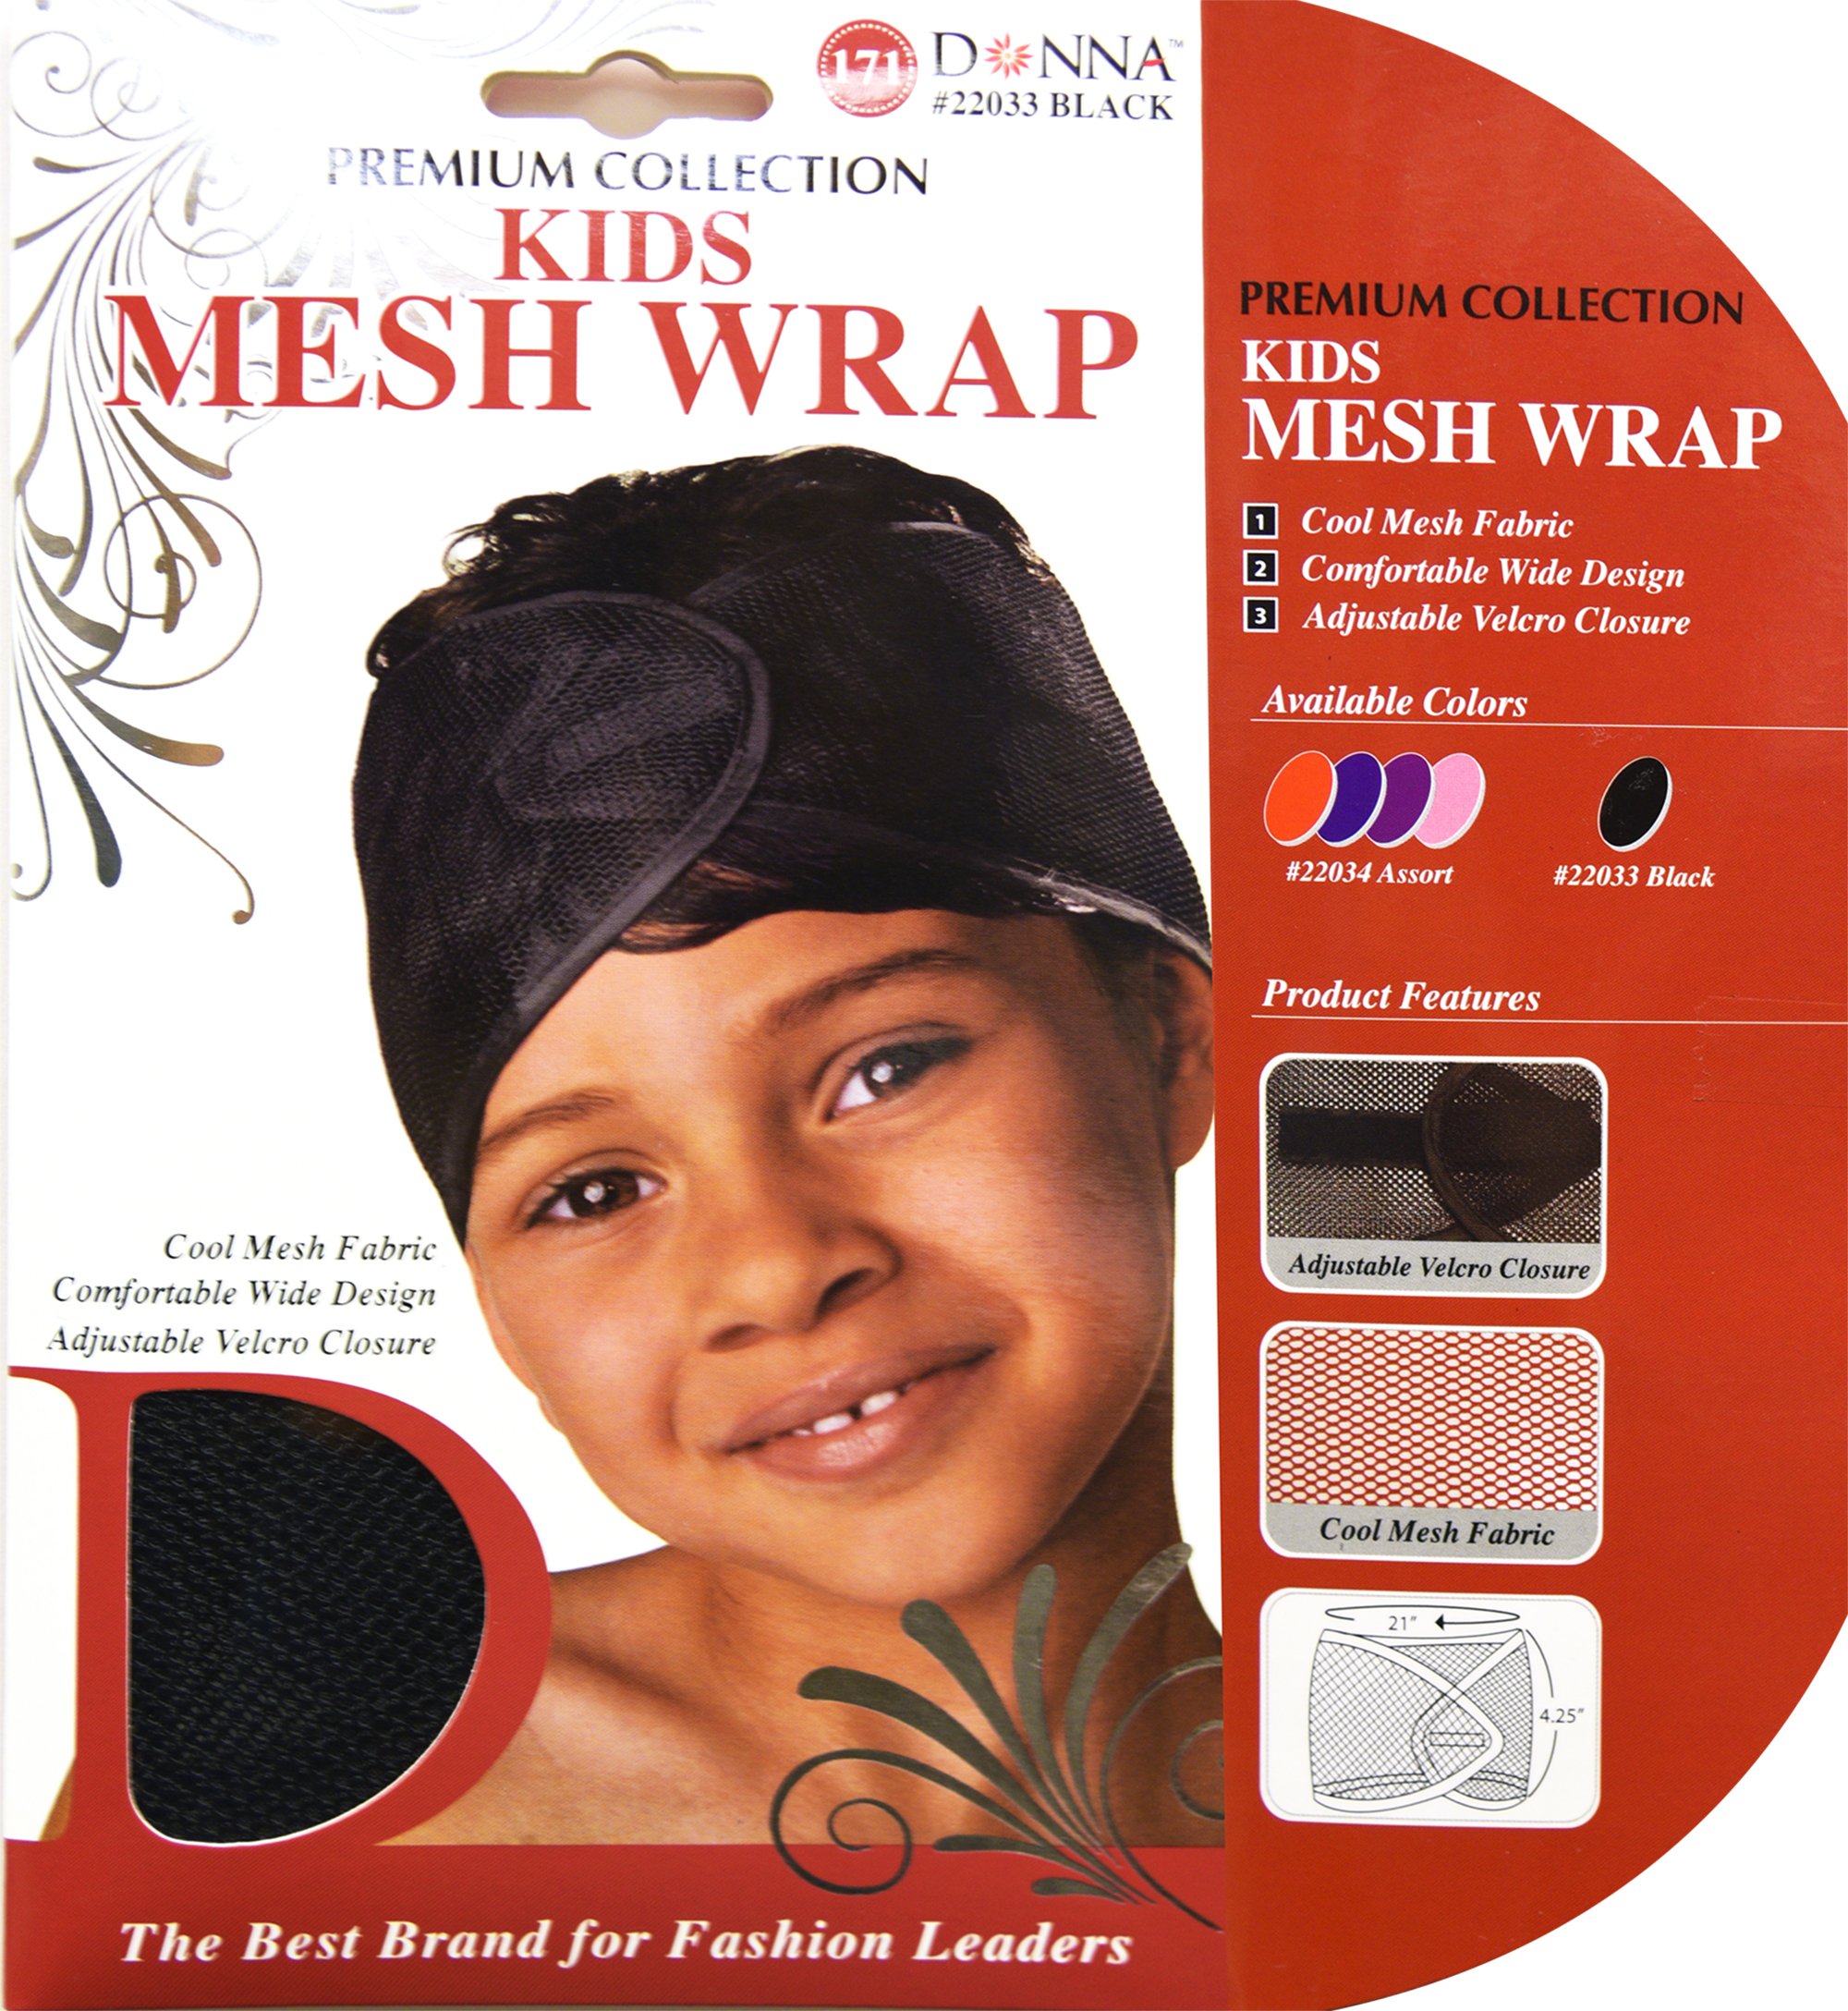 Donna Premium Collection Kids Mesh Wrap #22033 Black